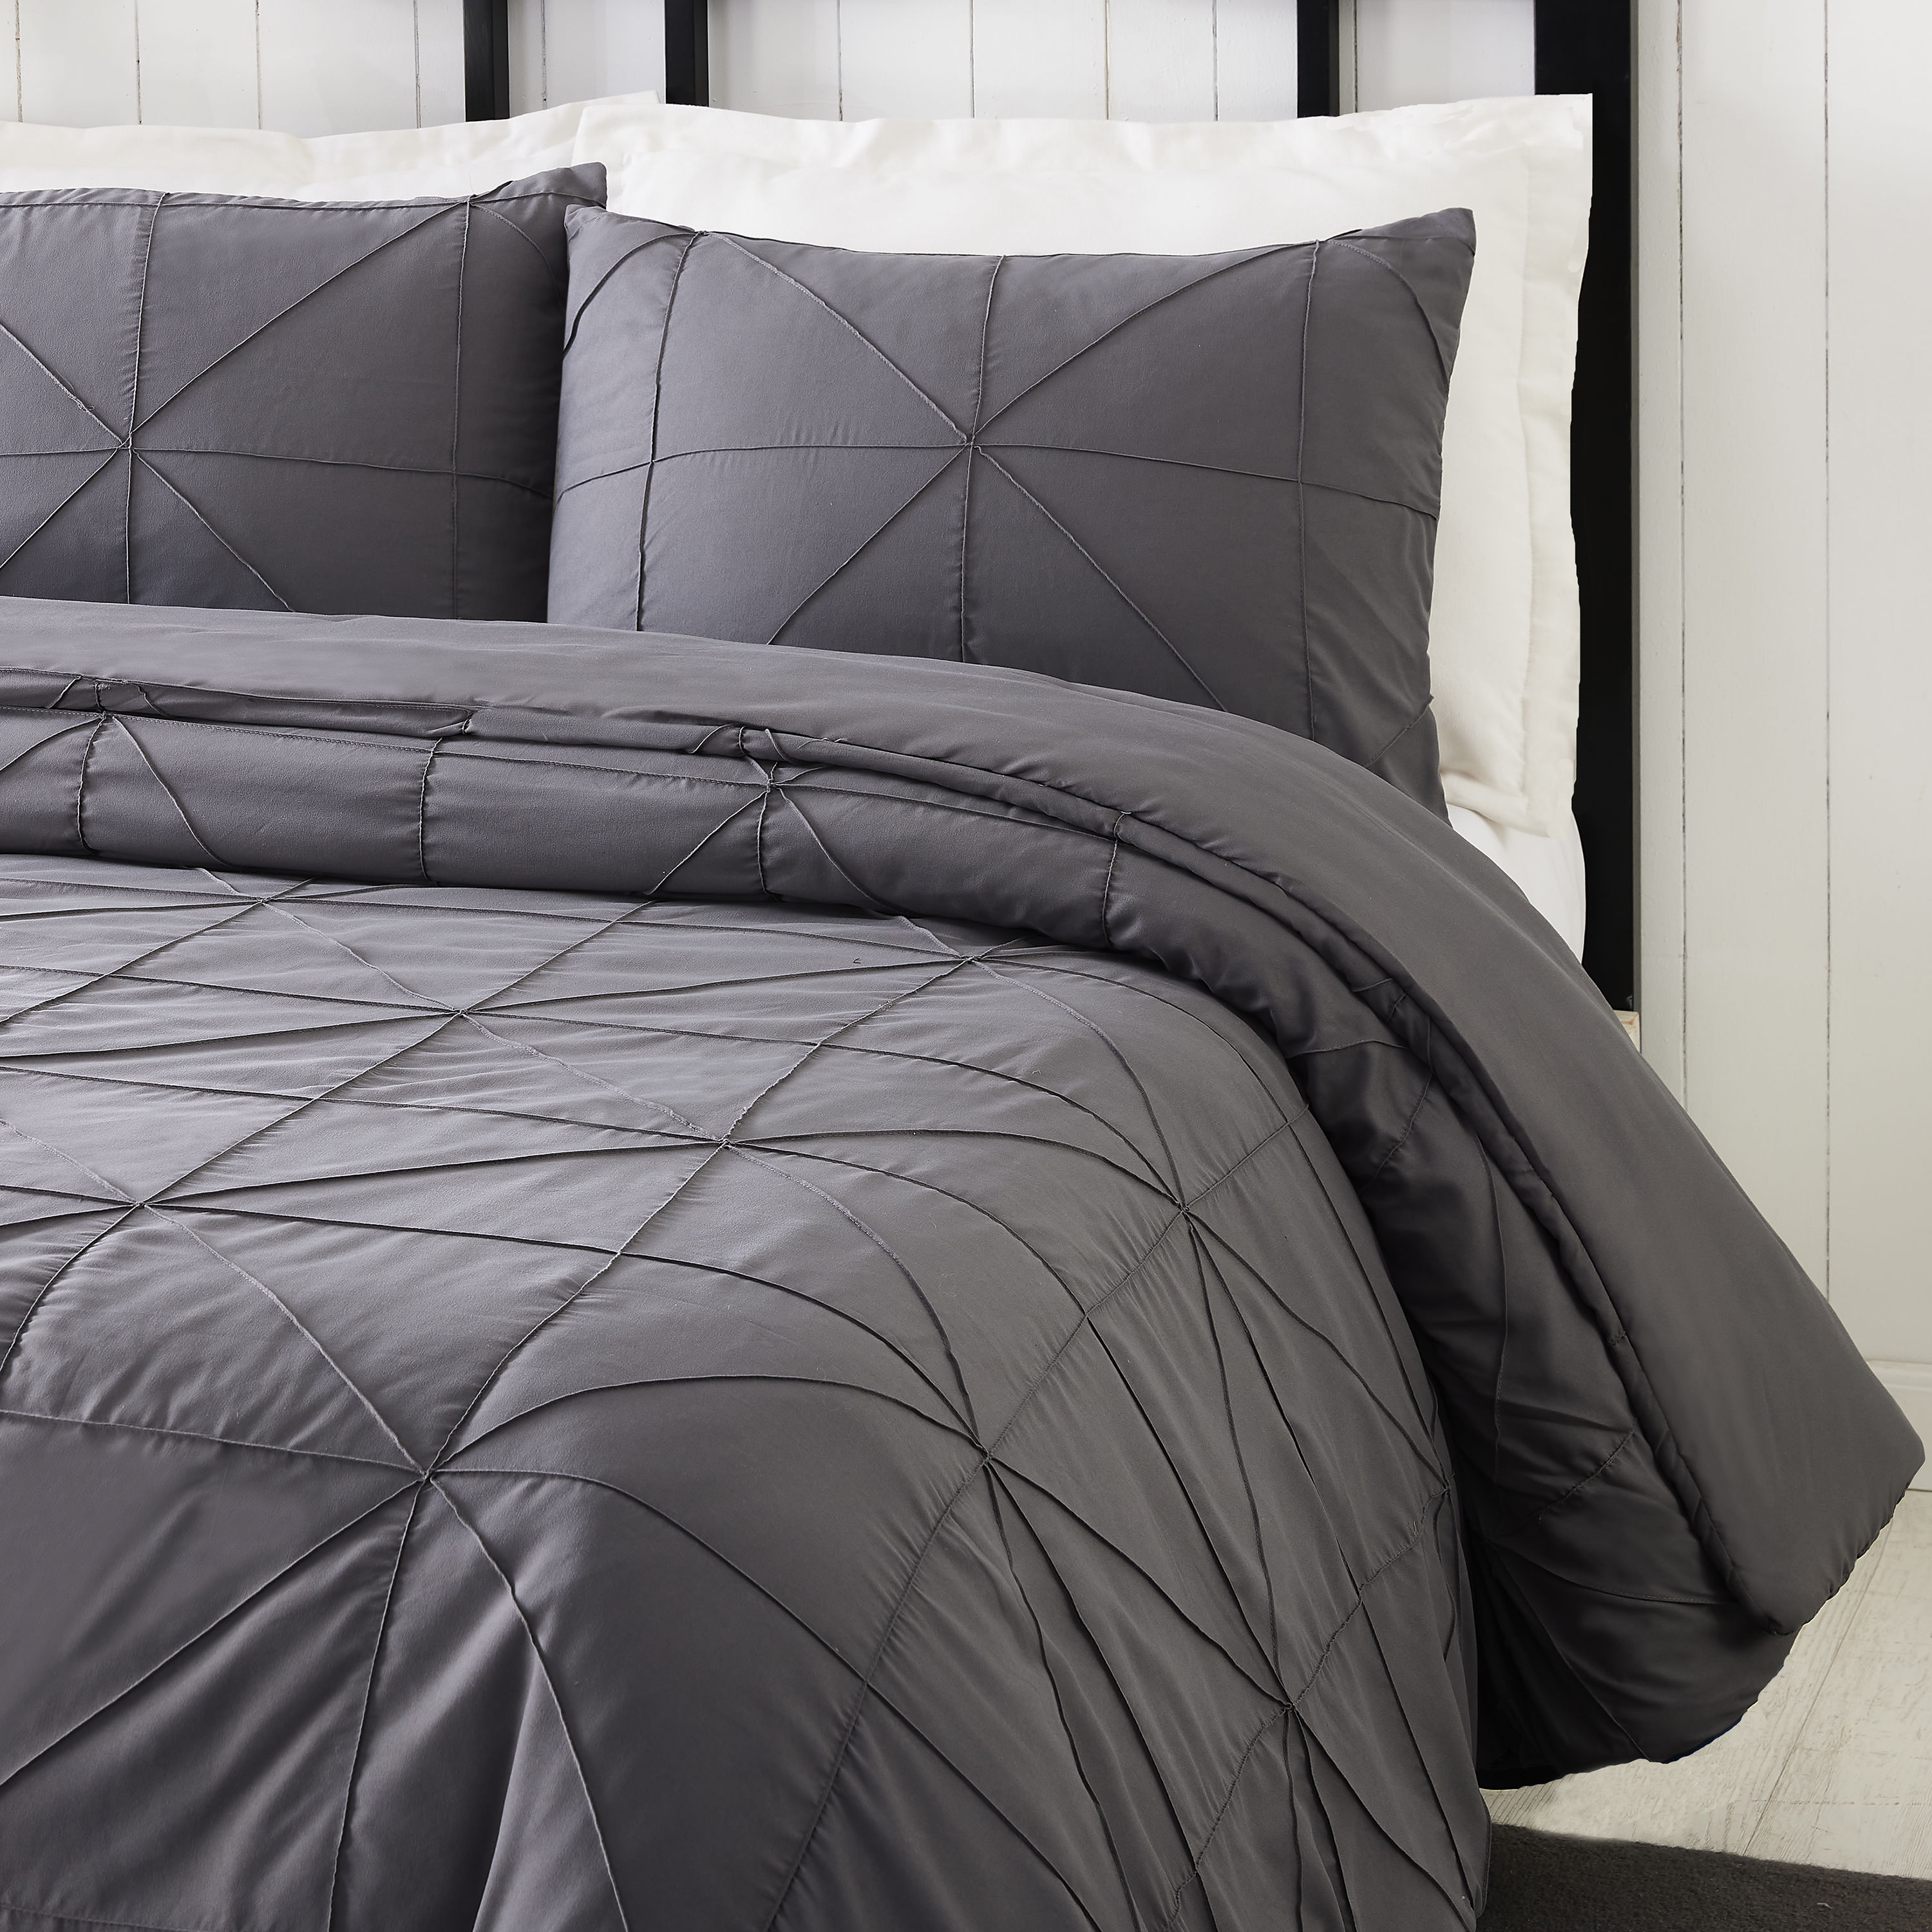 ETDIFFE Grey Comforter Set Twin/Twin XL Size, 2pc Aesthetic Modern Gray  Bedding Set - Soft & Lightweight All Season Extra Long Microfiber Down